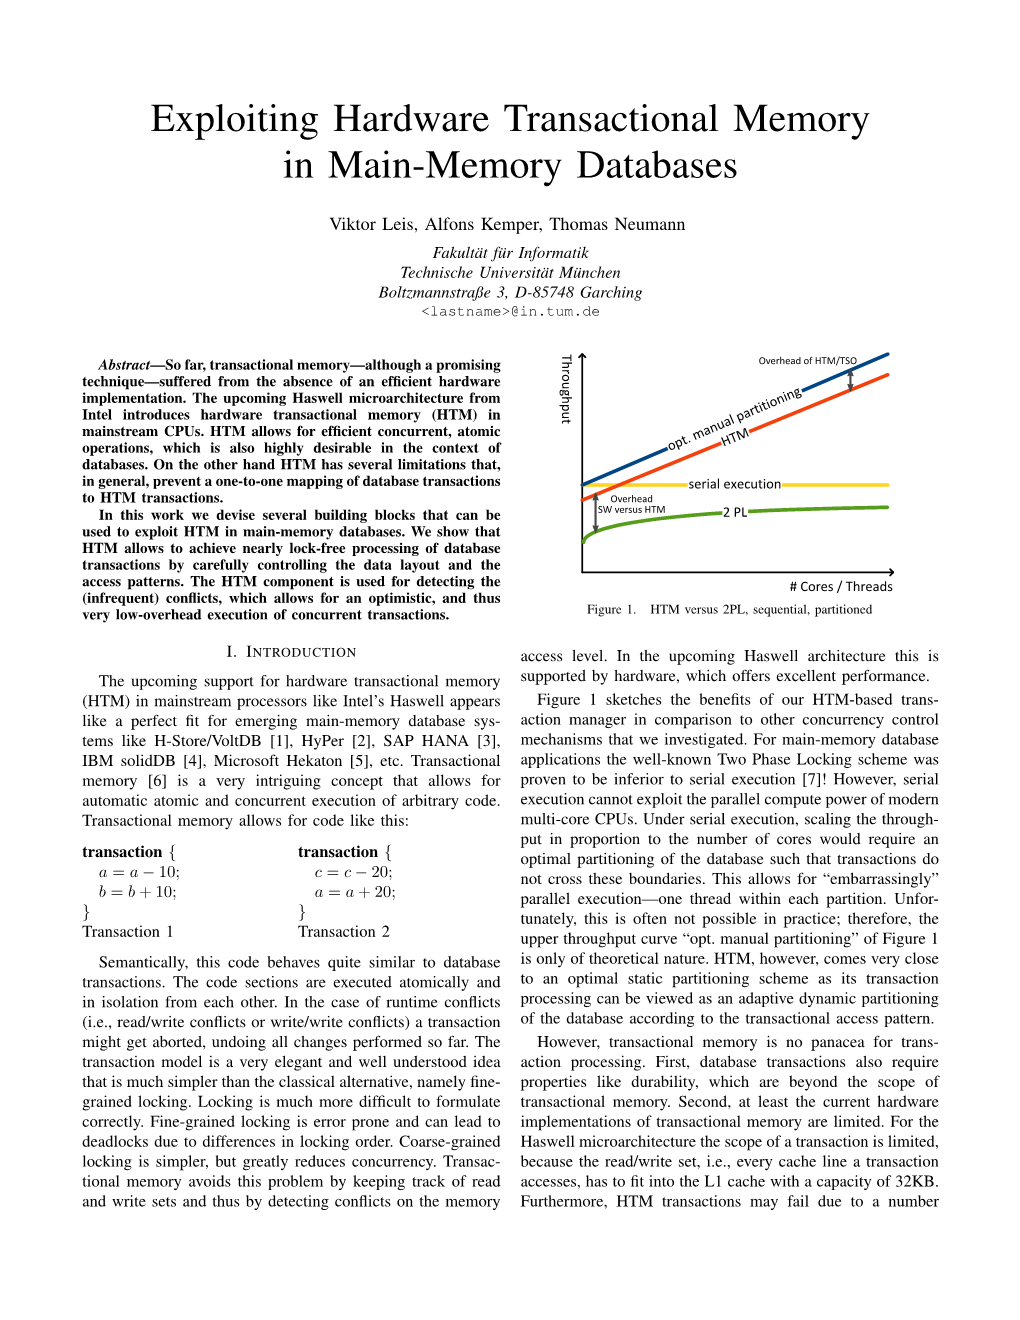 Exploiting Hardware Transactional Memory in Main-Memory Databases